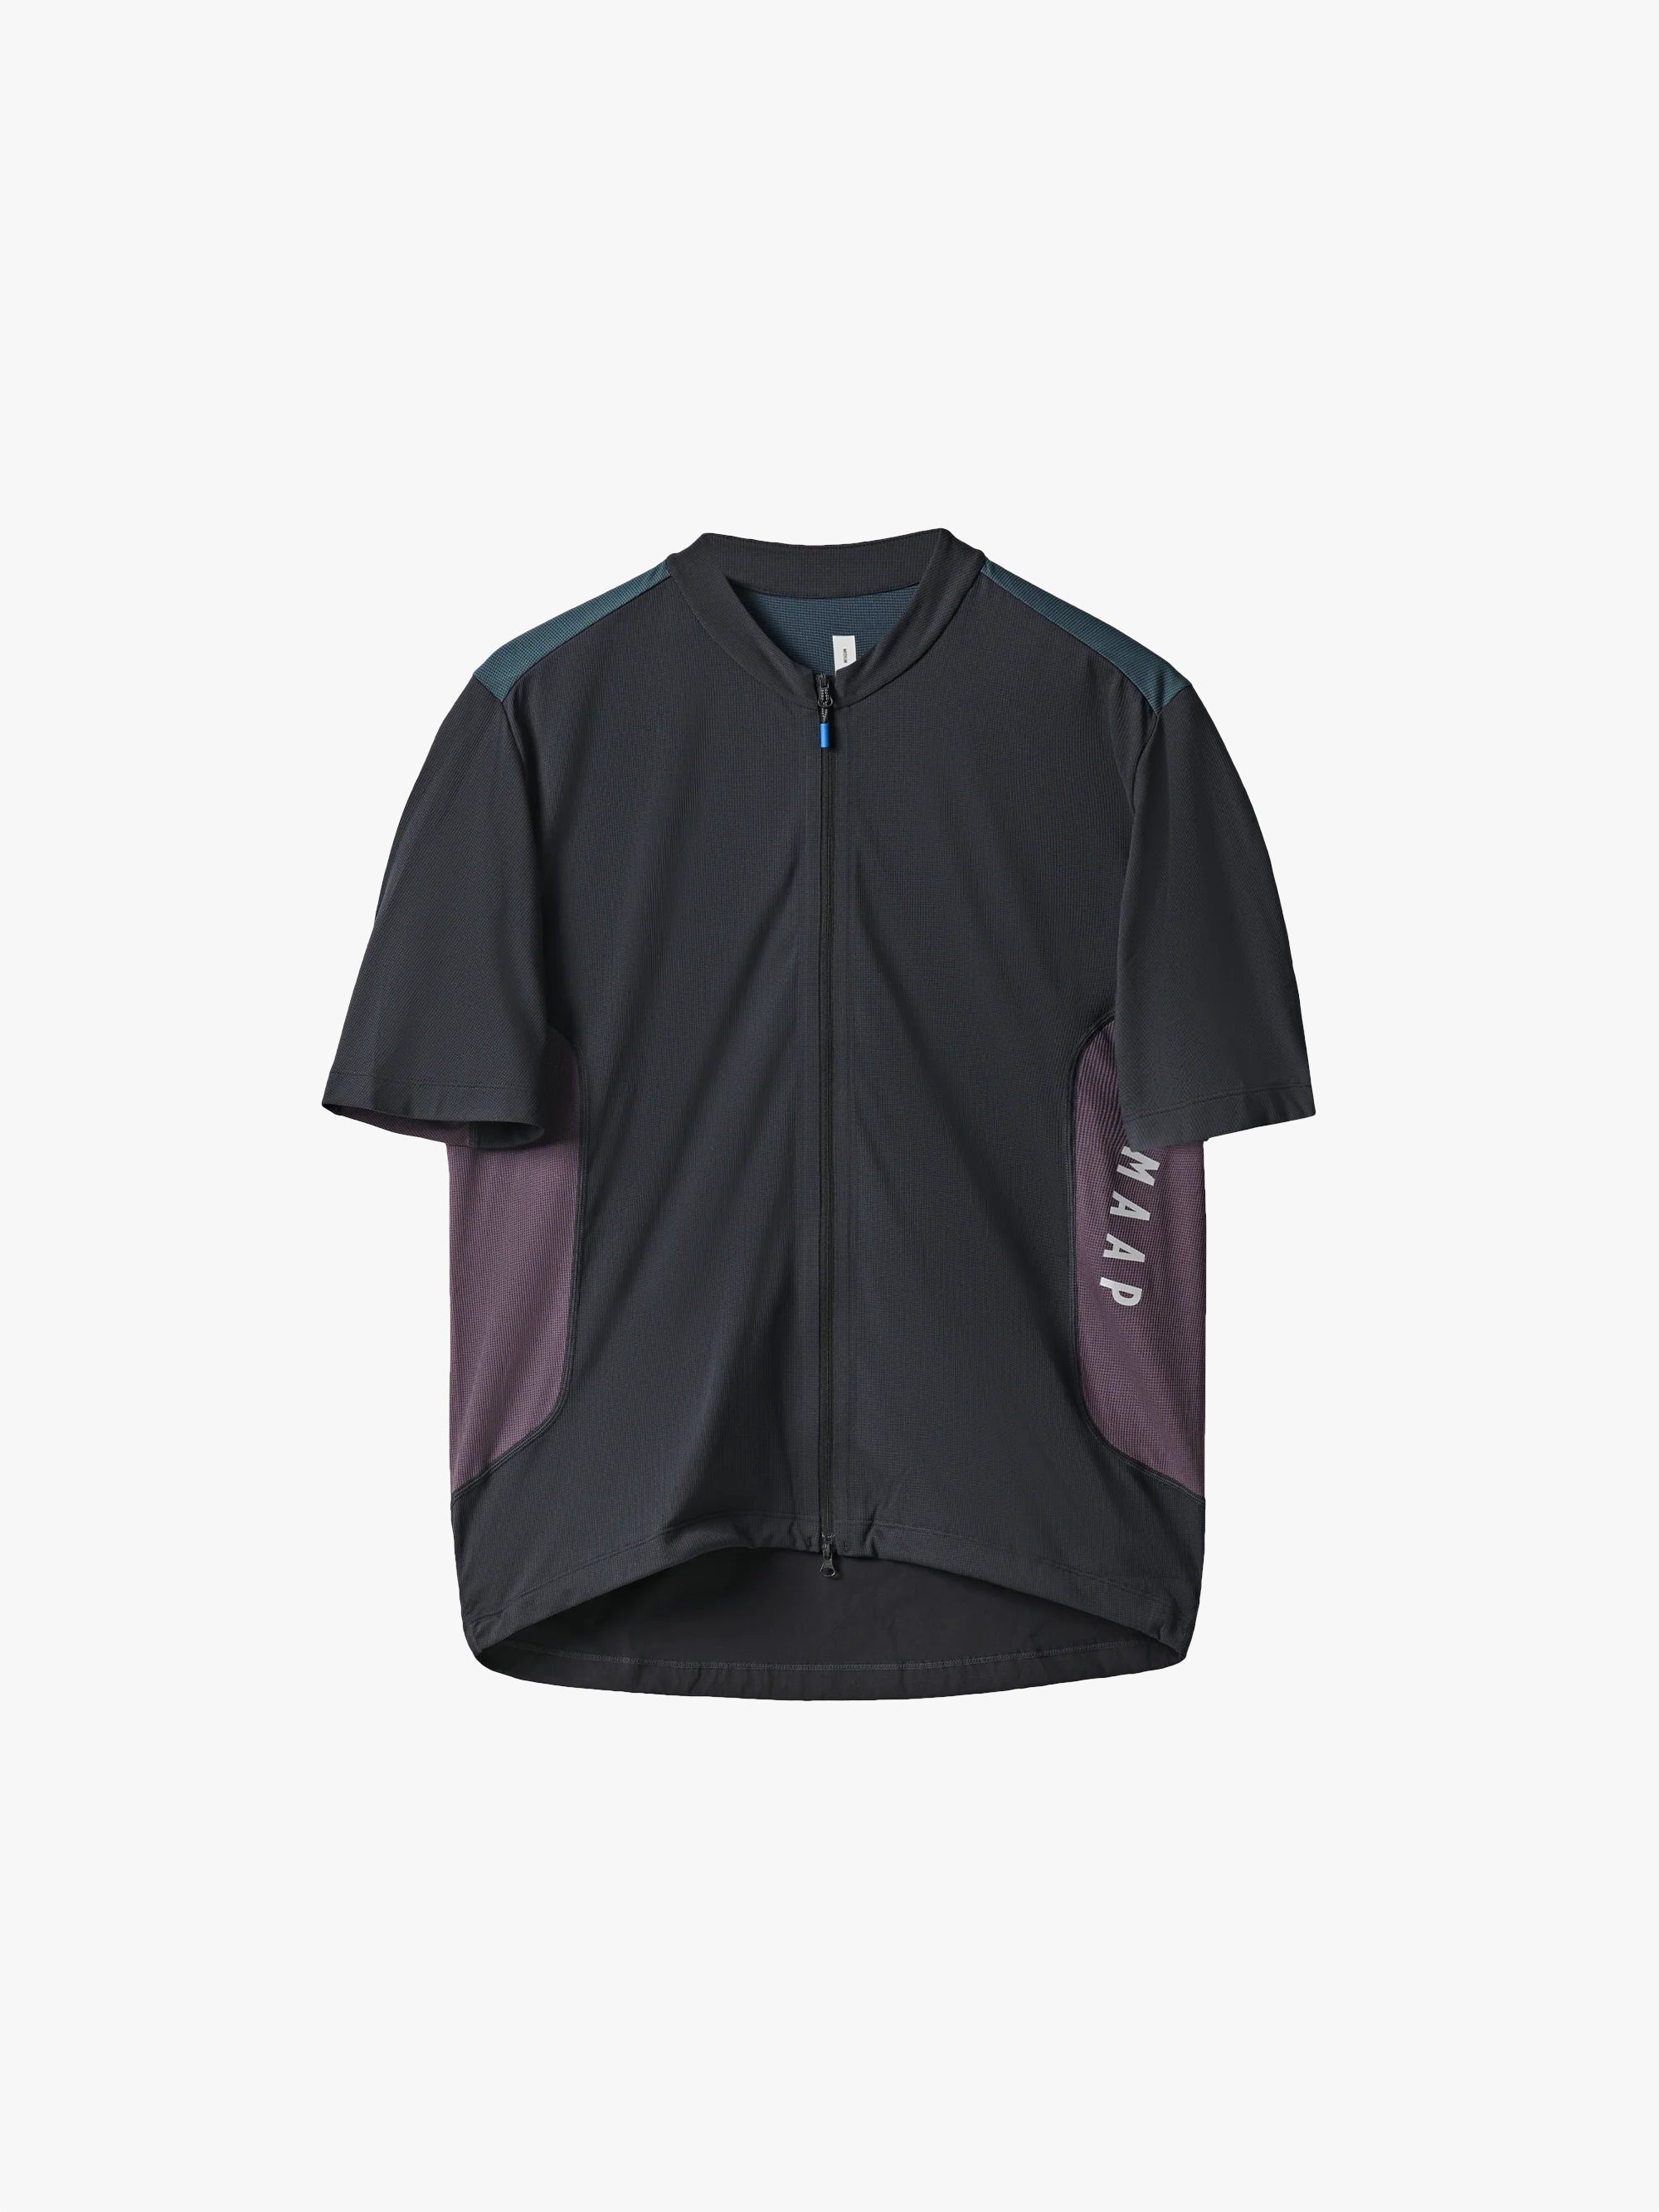 MAAP Alt_Road Zip Tee Black | 多用途で快適なアドベンチャーウェアサイクルTシャツ | CYCLISM